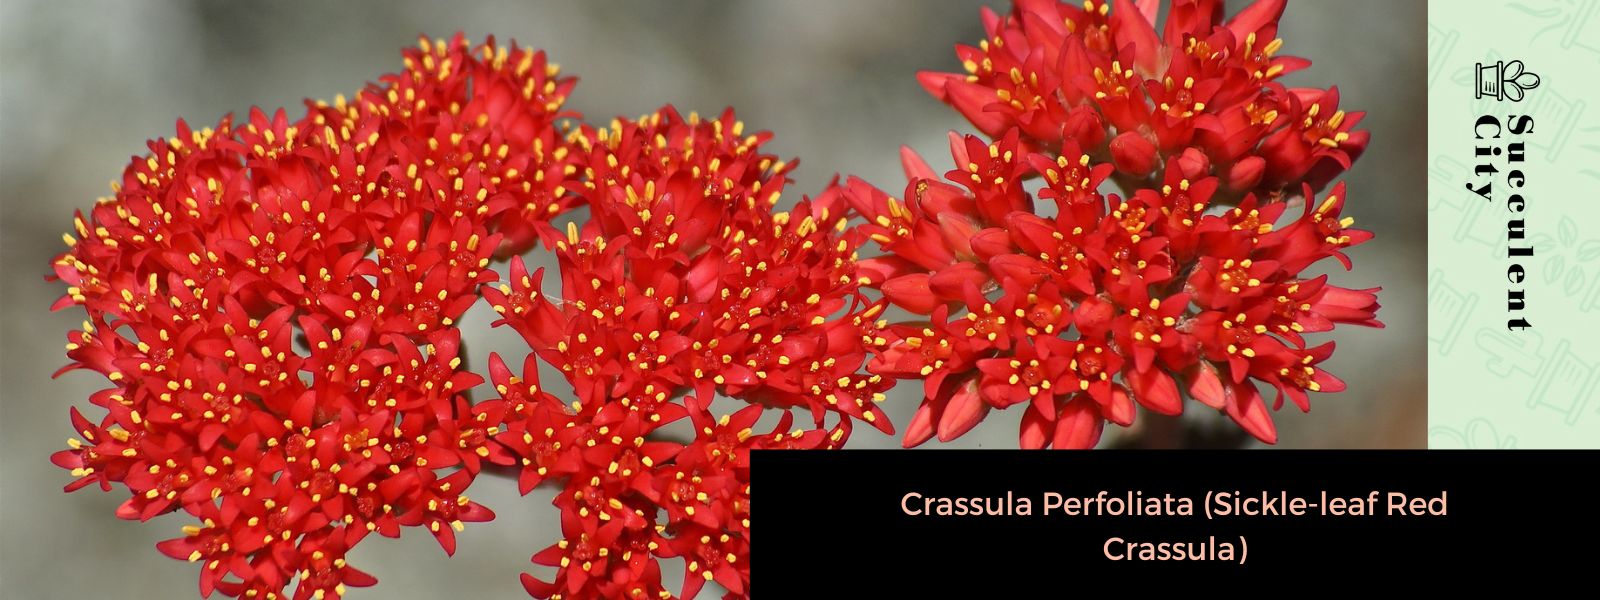 Crassula perfoliata (Crassula de hoja falciforme)